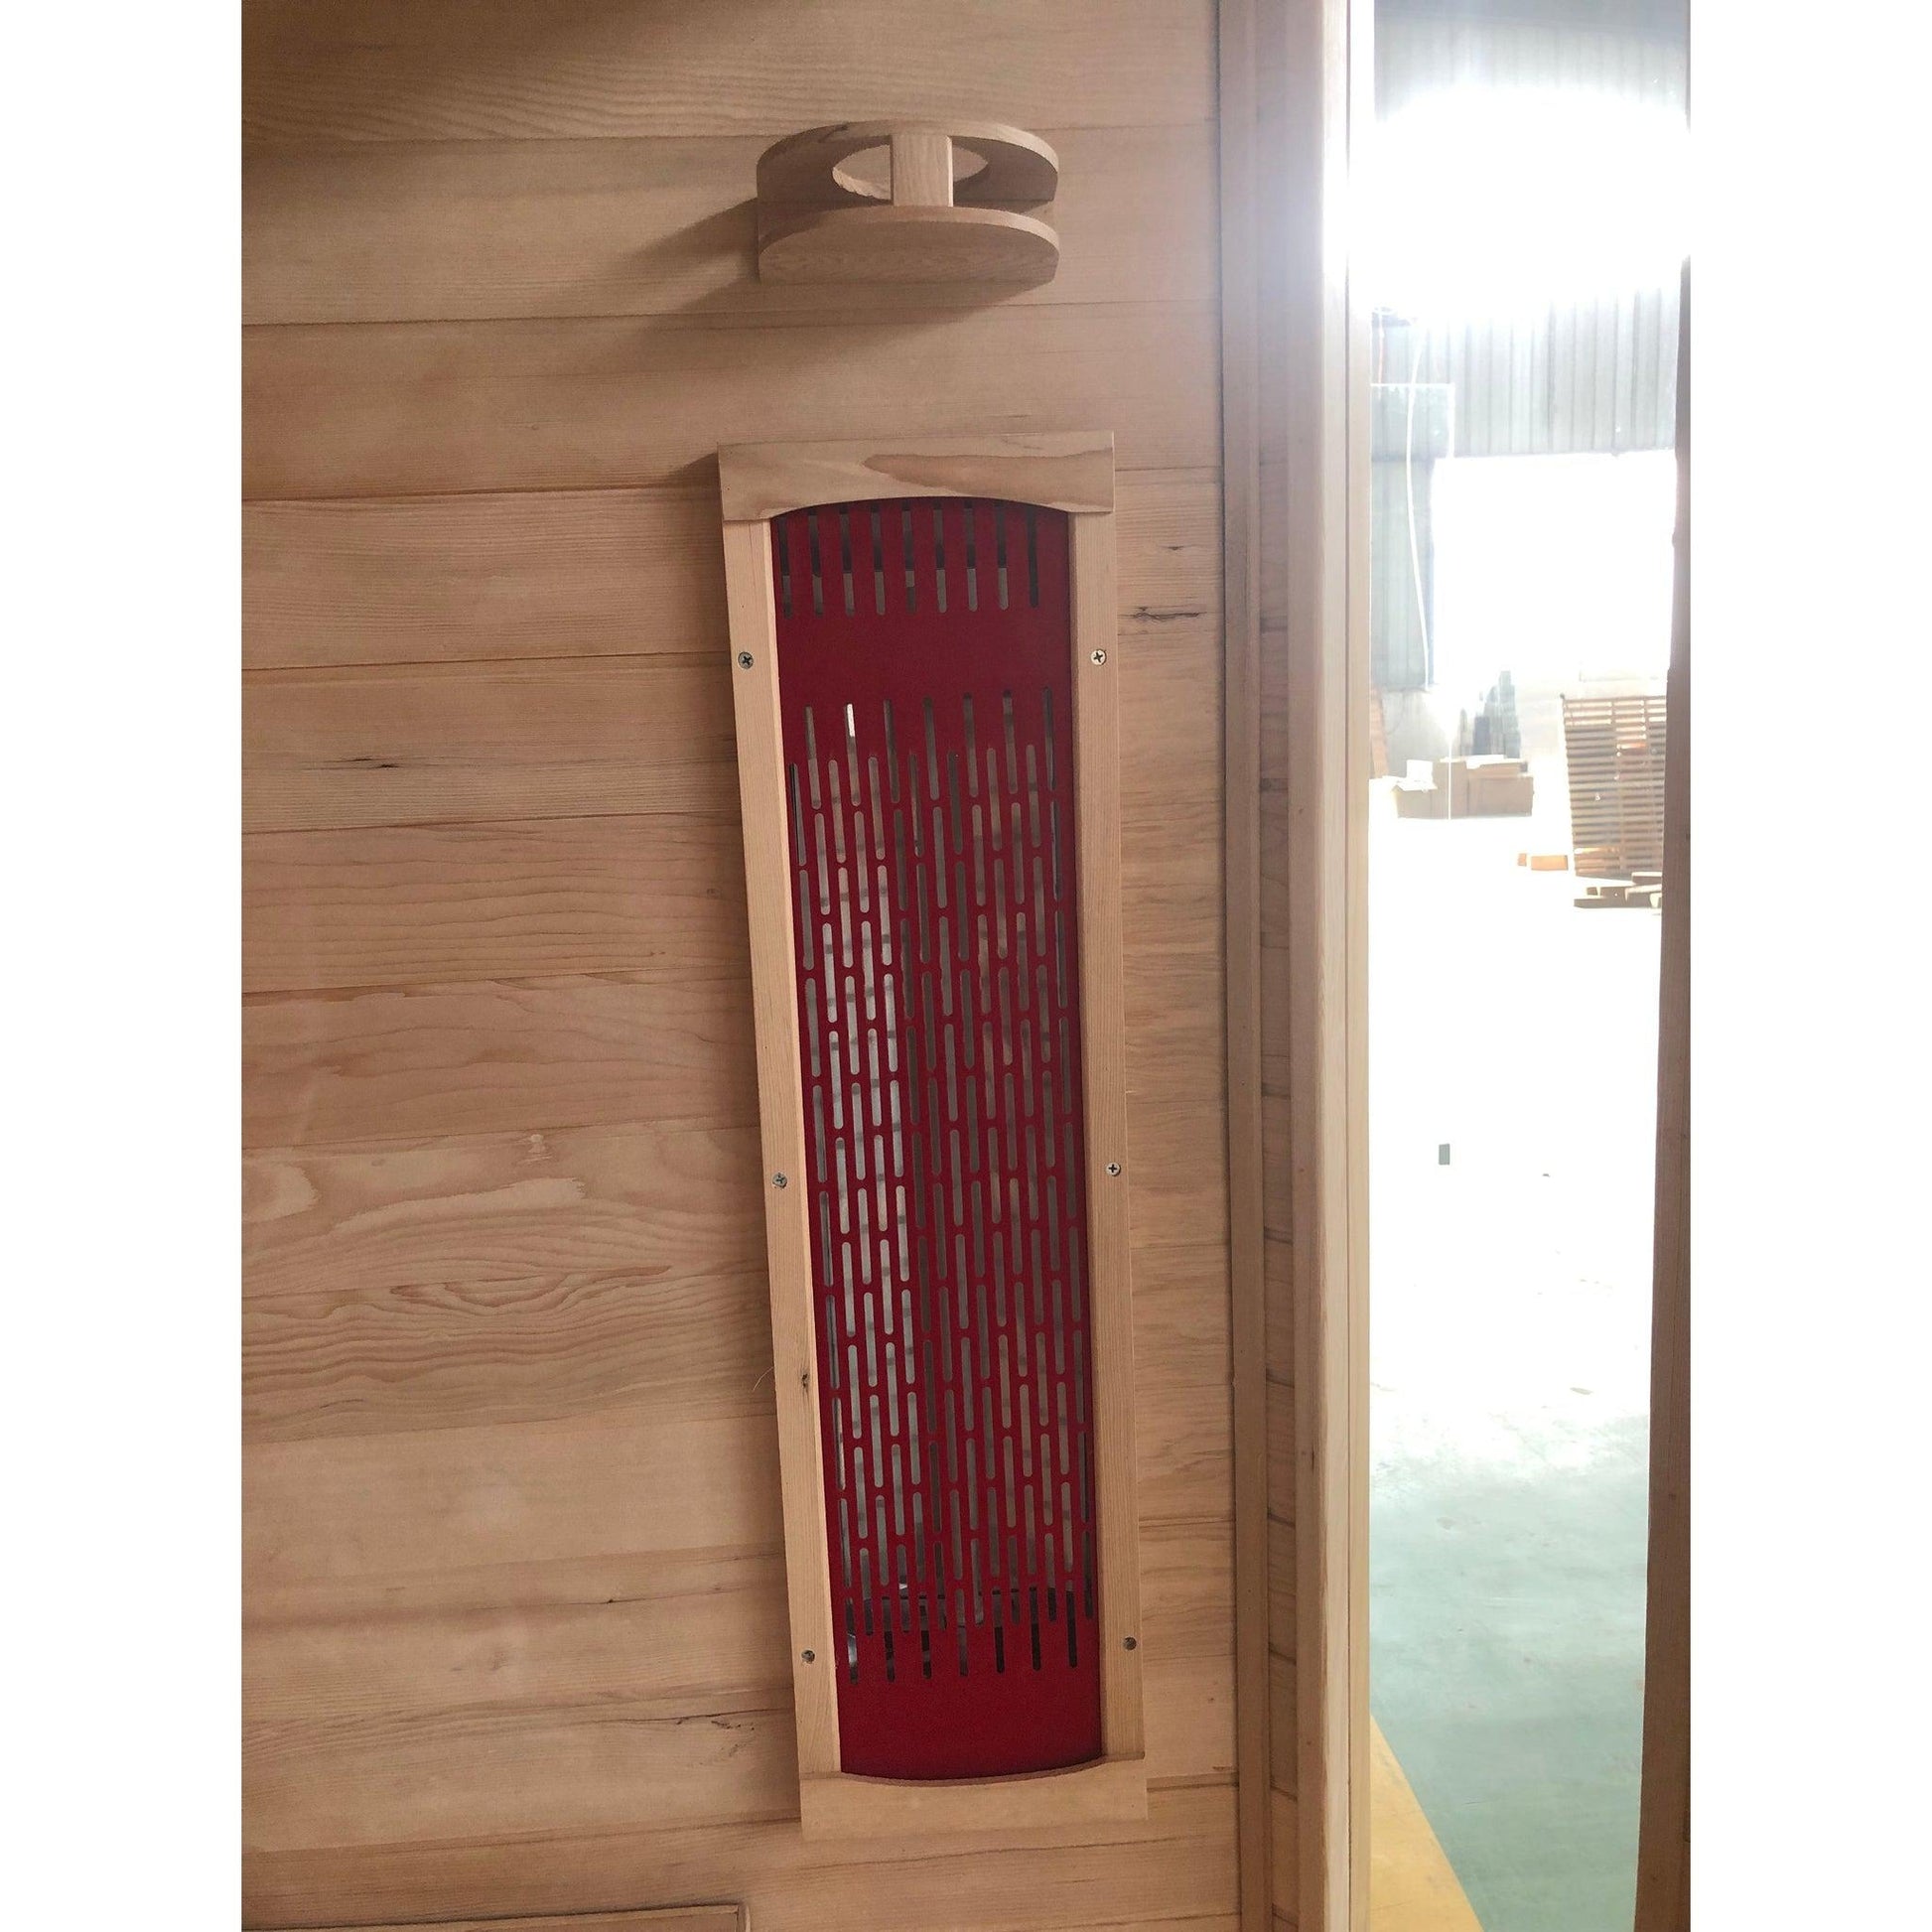 SunRay Burlington 2-Person Outdoor Infrared Sauna In Hemlock Wood With Ceramic Heaters